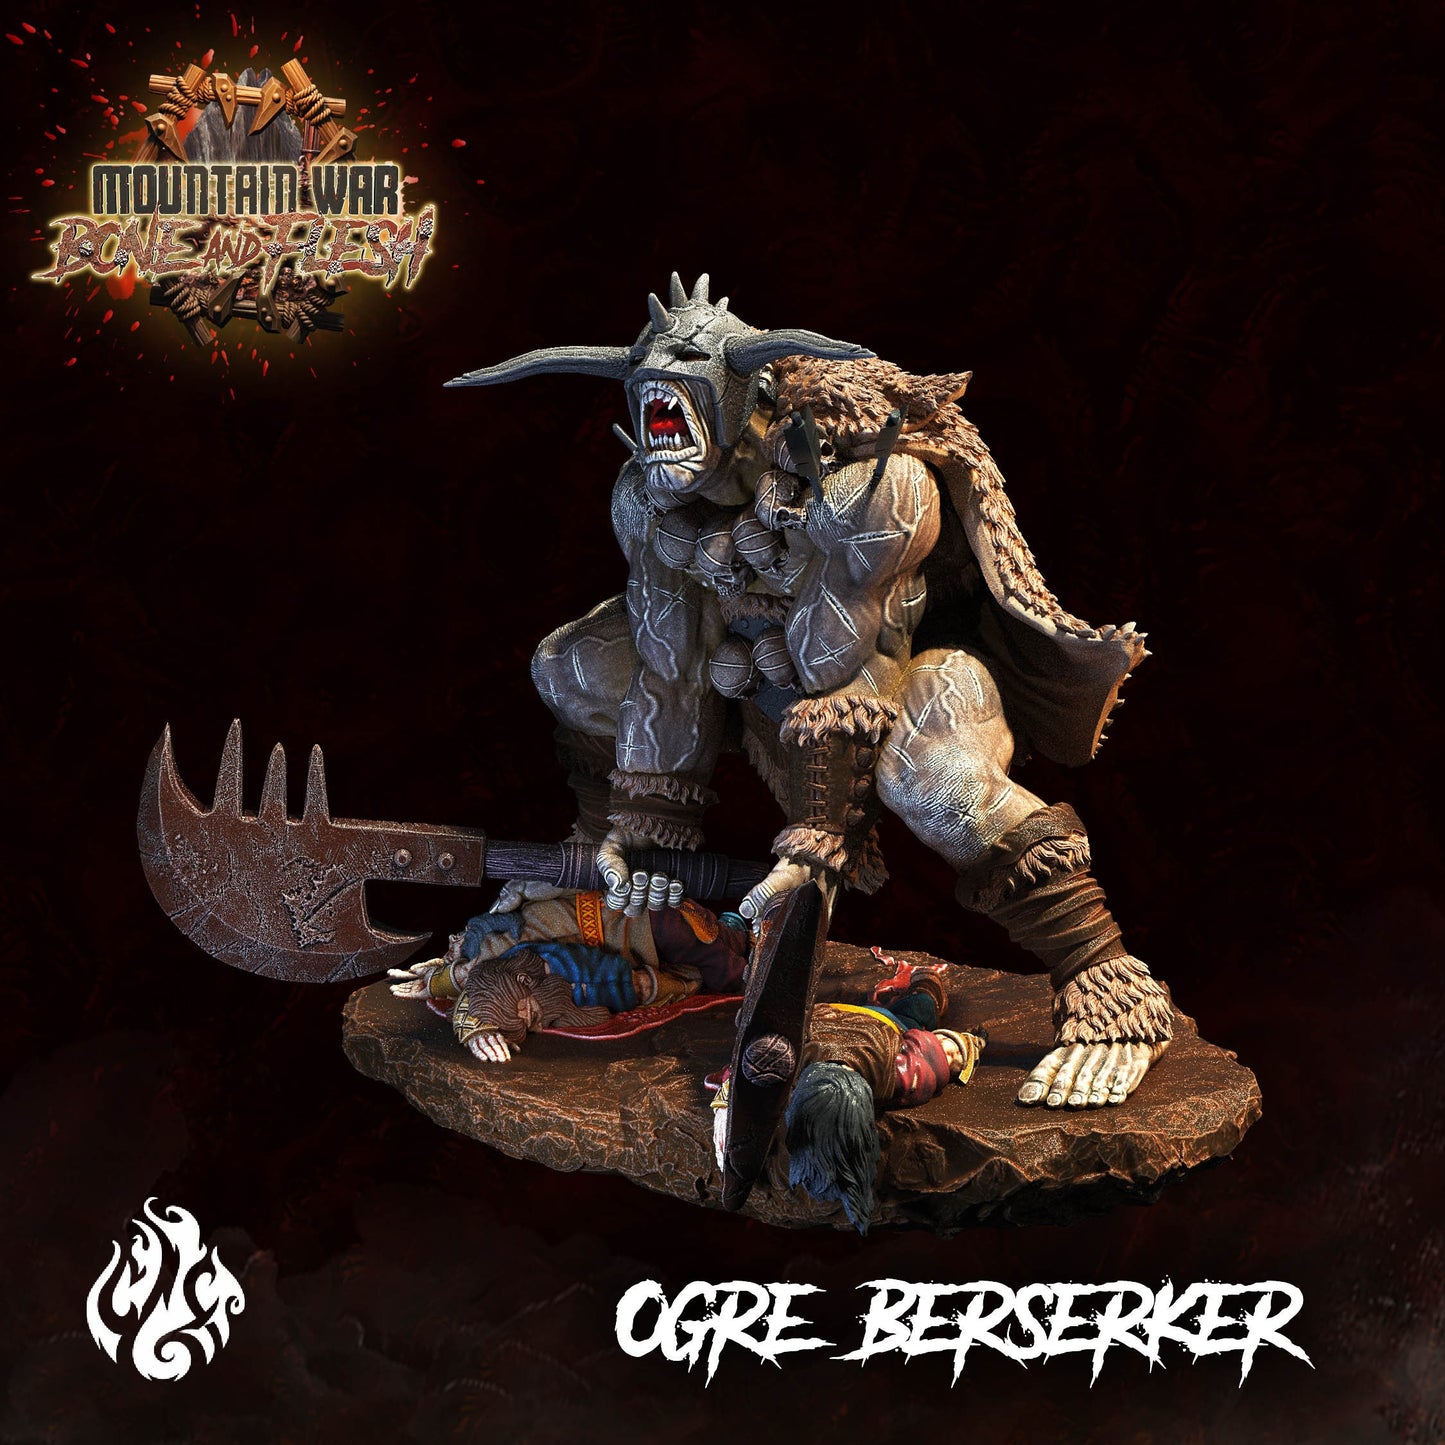 Ogre Beserker Miniature - by Crippled God Foundry | Ogre Warriors | DnD | Dungeons & Dragons | Pathfinder | Warhammer